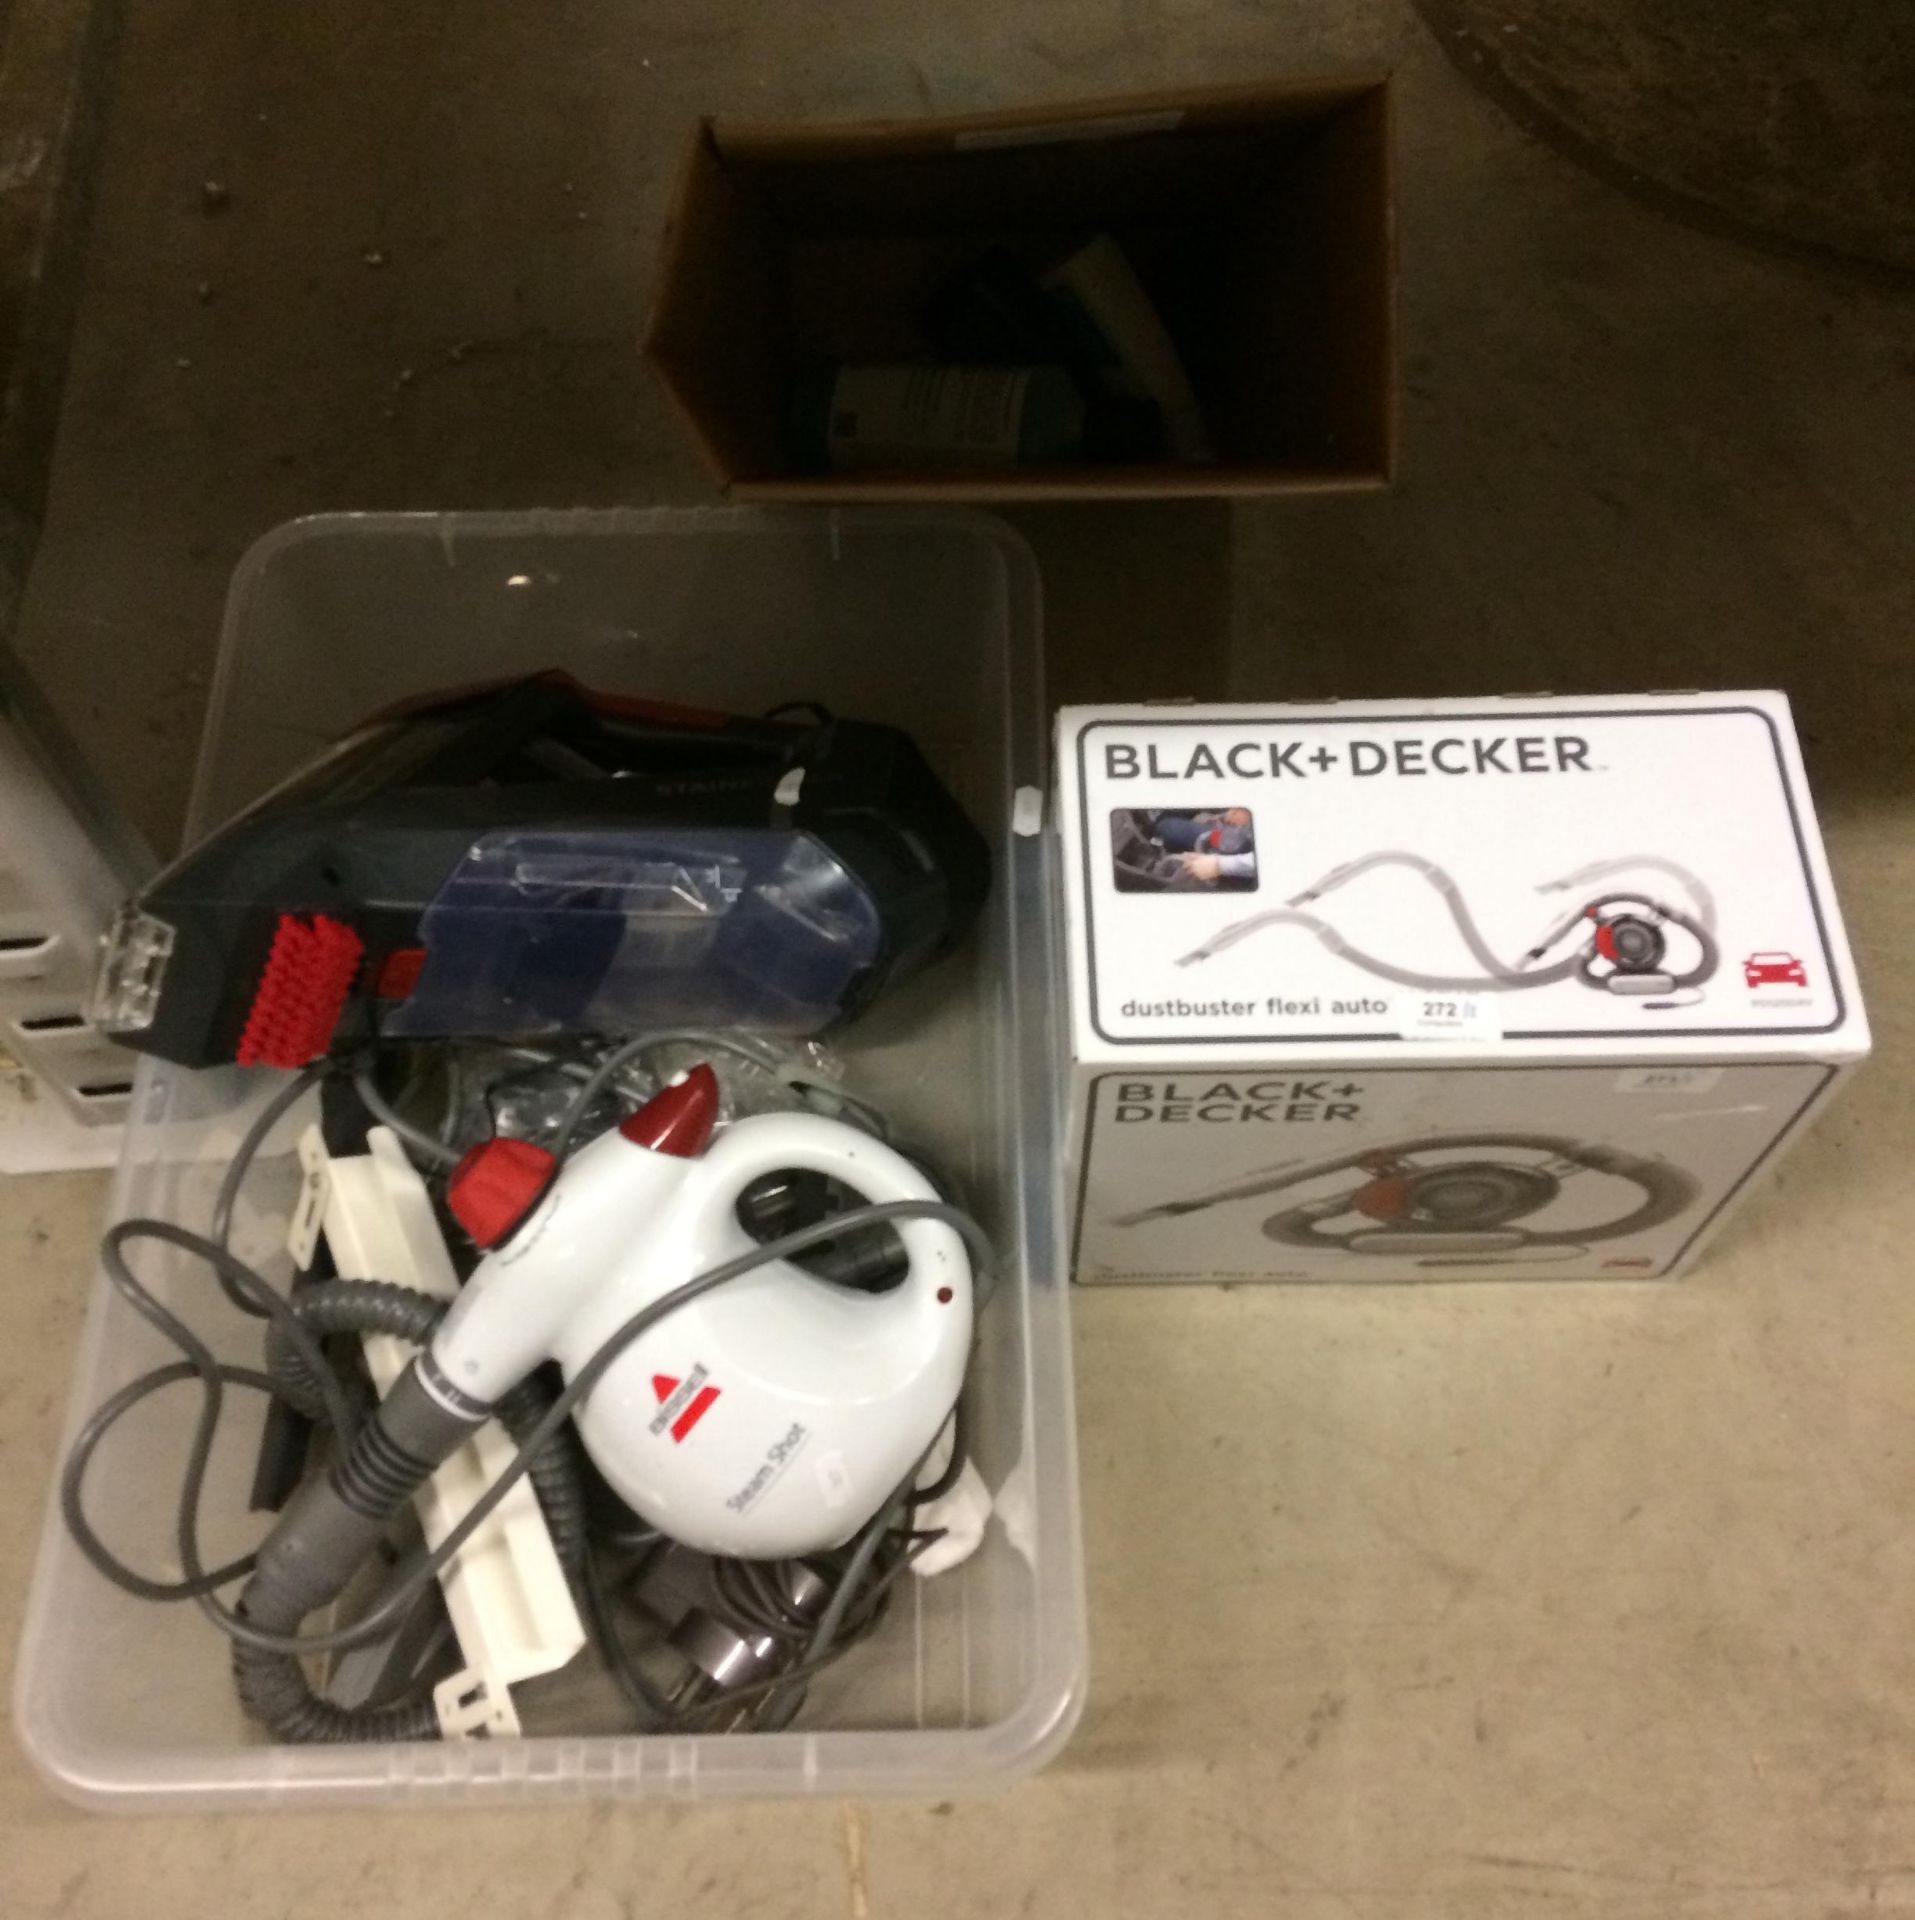 Three items - a Black & Decker PD1200AV Dustbuster flexi auto (boxed),